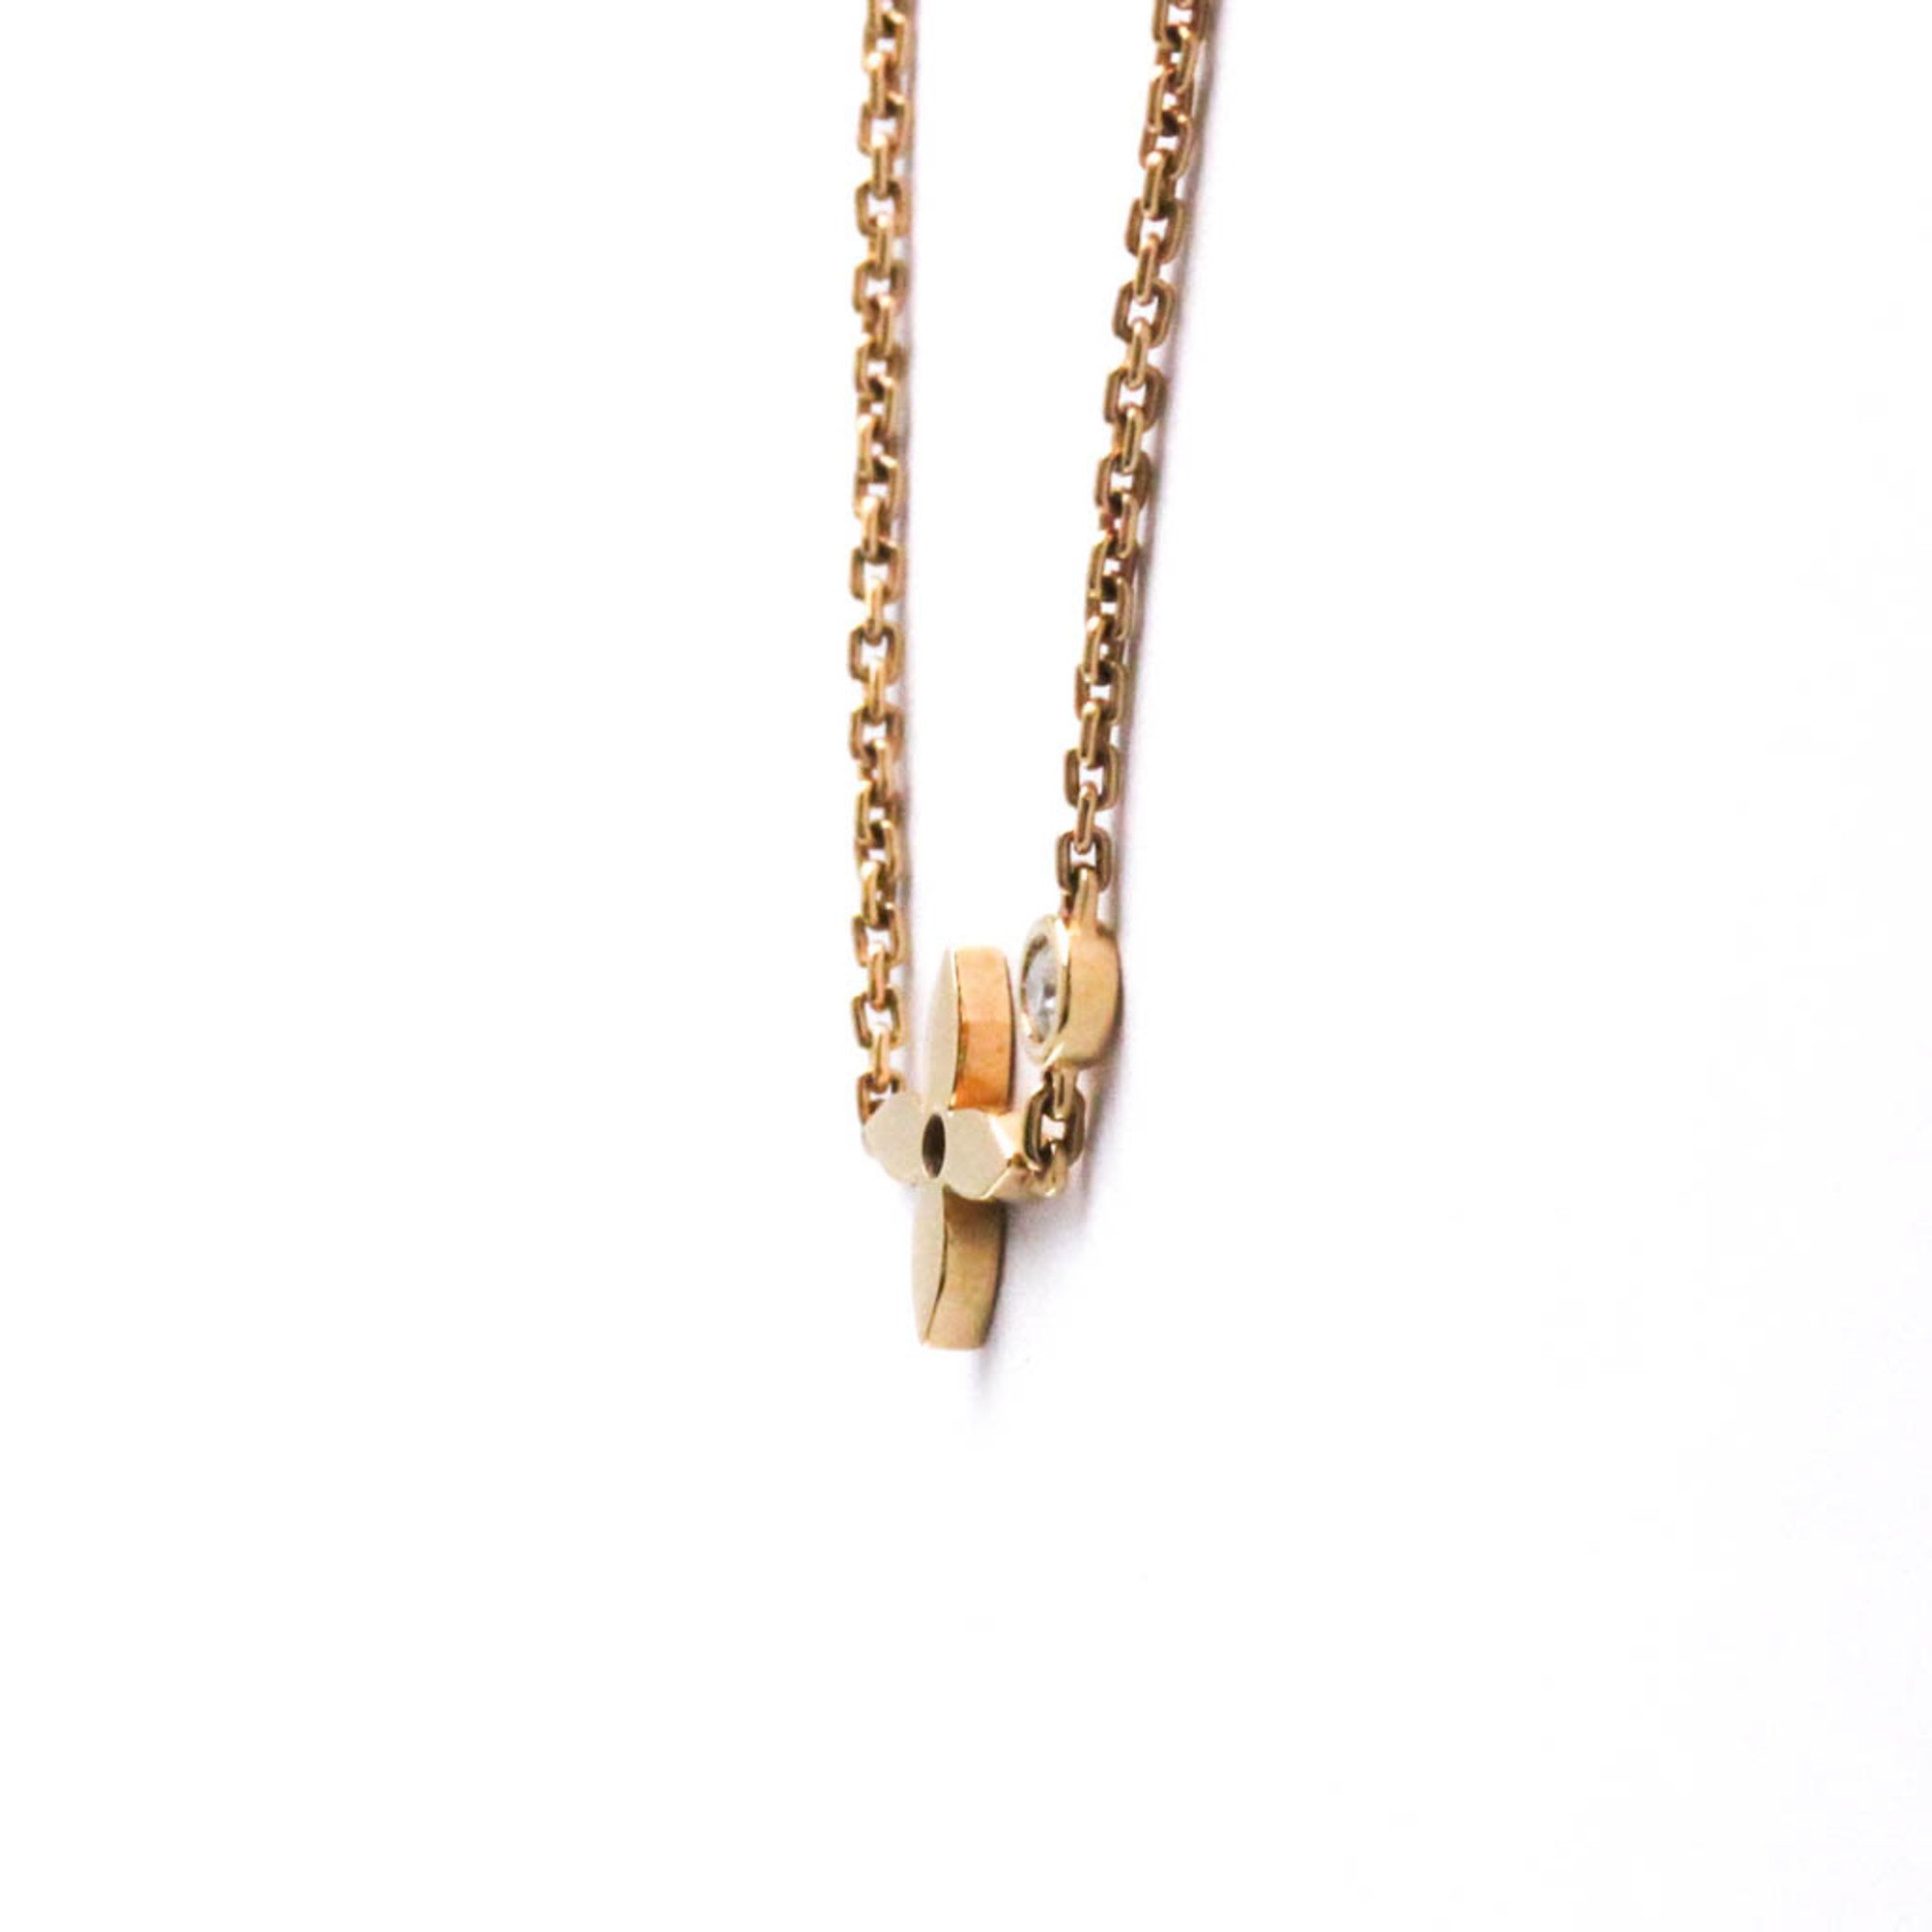 Louis Vuitton Pendentif Monogram Idylle Q93281 Pink Gold (18K) Diamond Women's Fashion Pendant Necklace (Pink Gold)